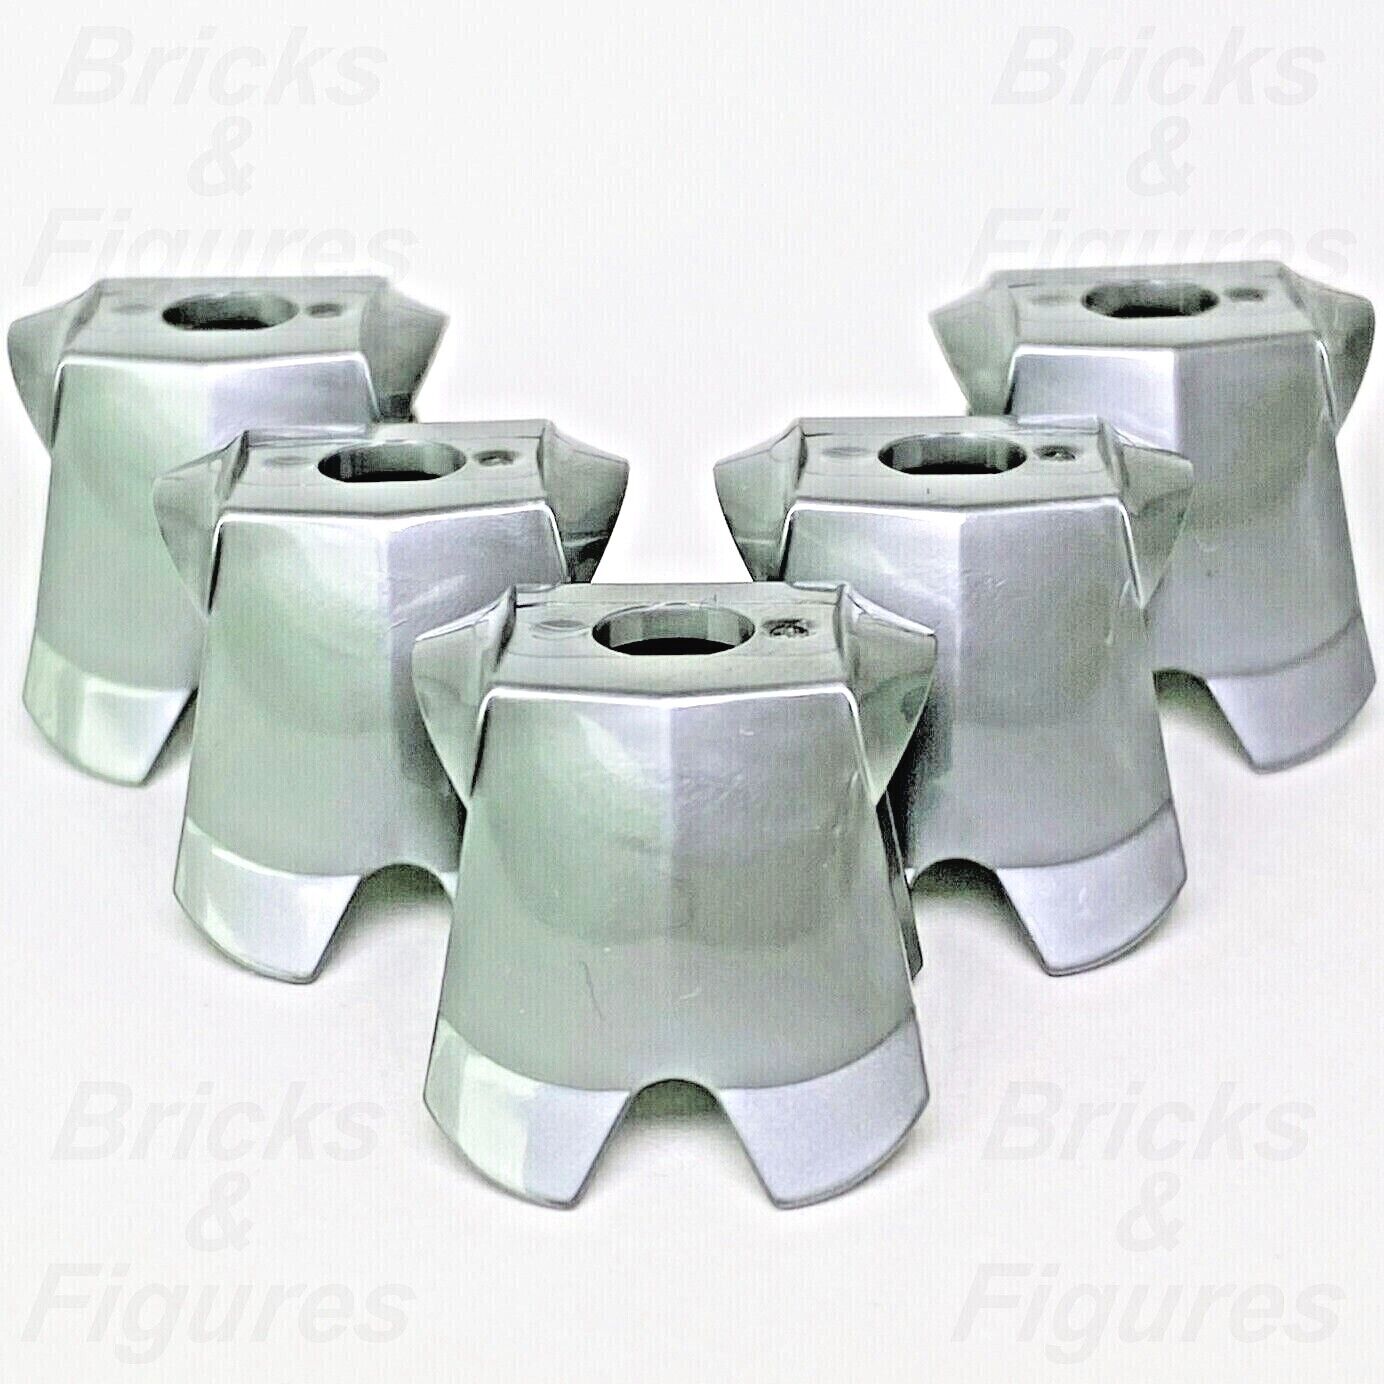 5 x LEGO Breastplate Armour Castle Knight Armor Minifigure Part 2587 33468 New - Bricks & Figures